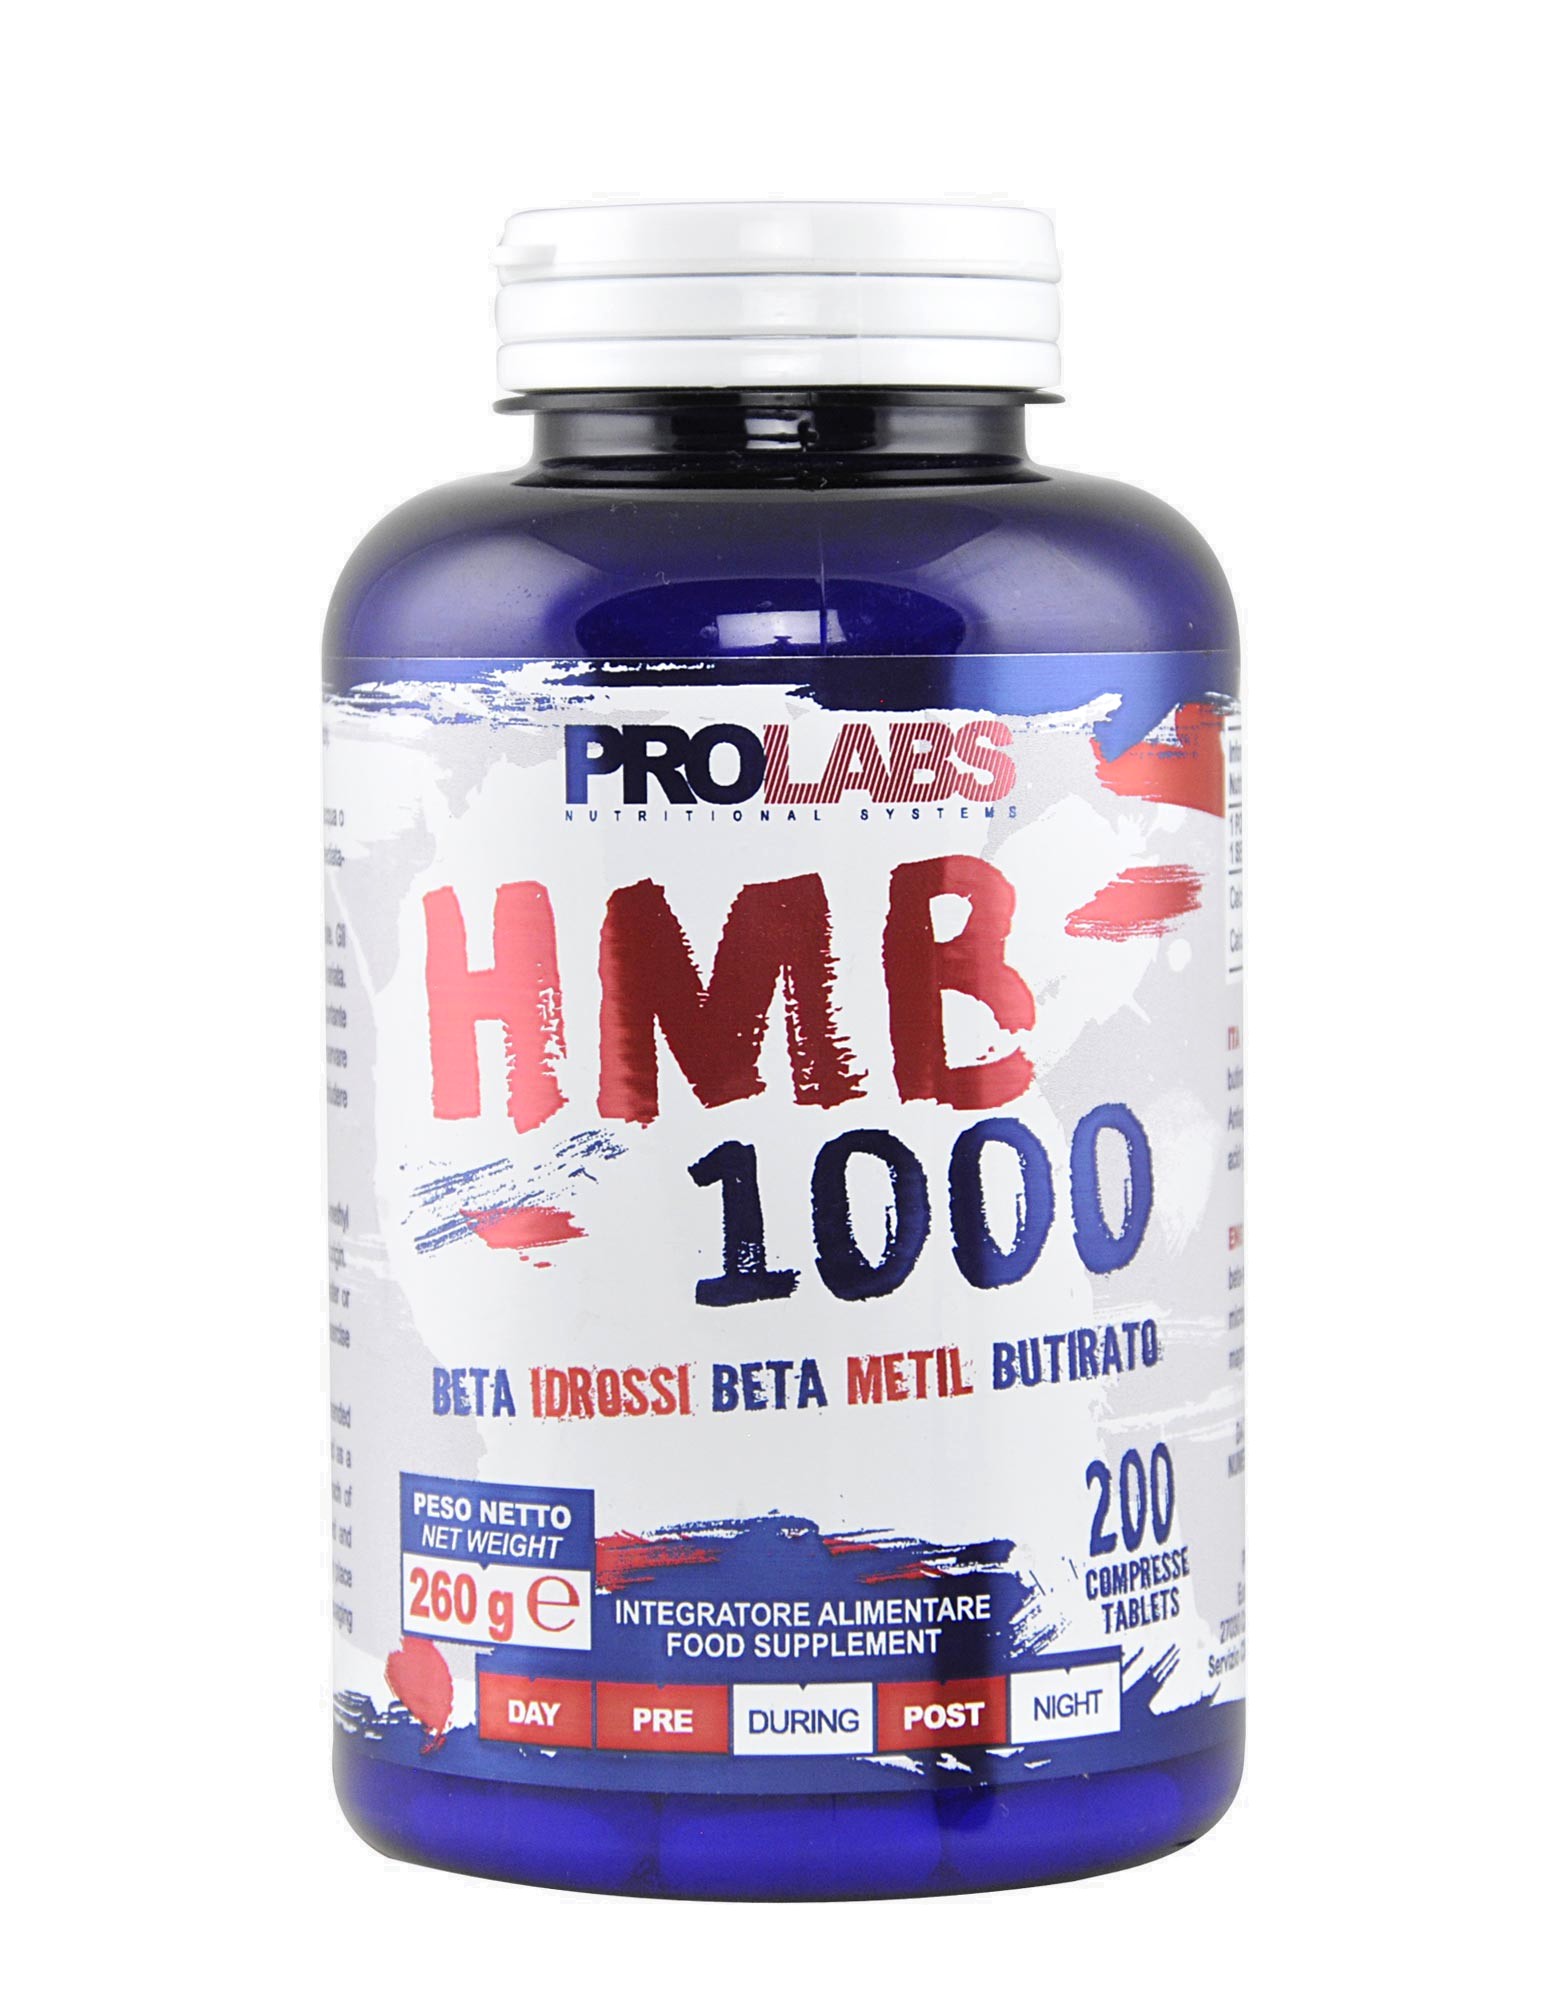 hmb-1000-by-prolabs-200-tablets